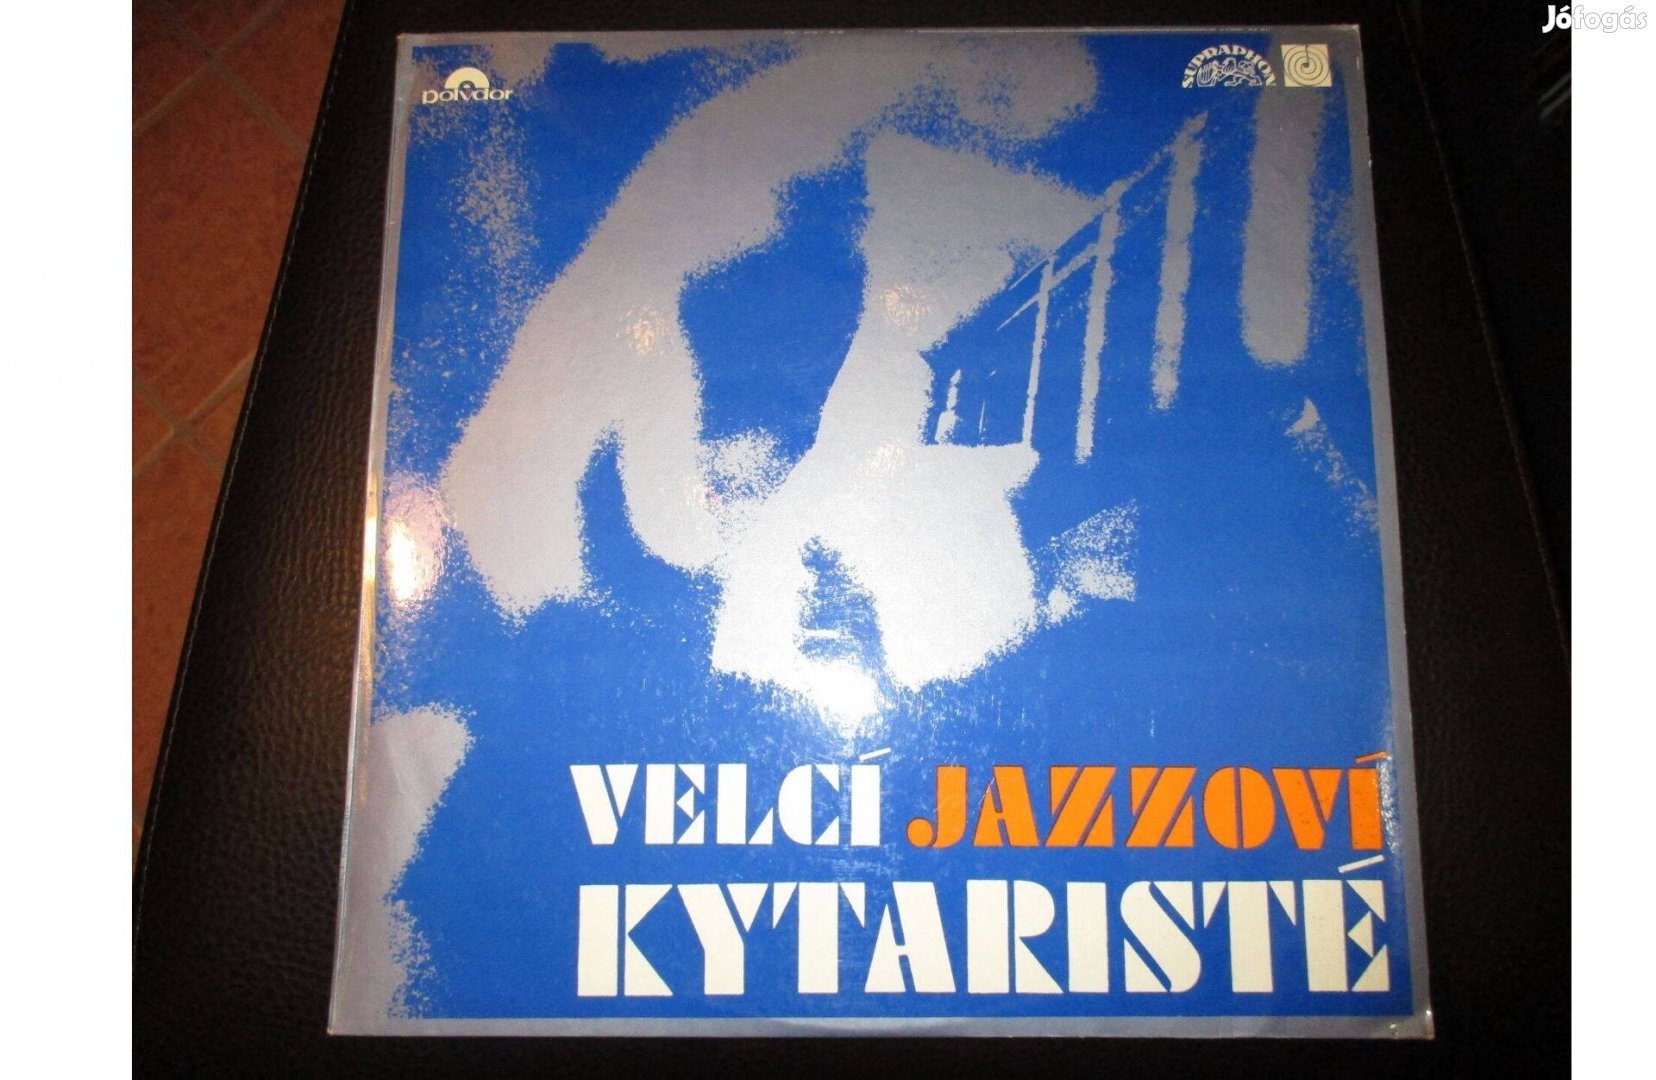 Velci Jazzovi Kytaristé bakelit hanglemez eladó